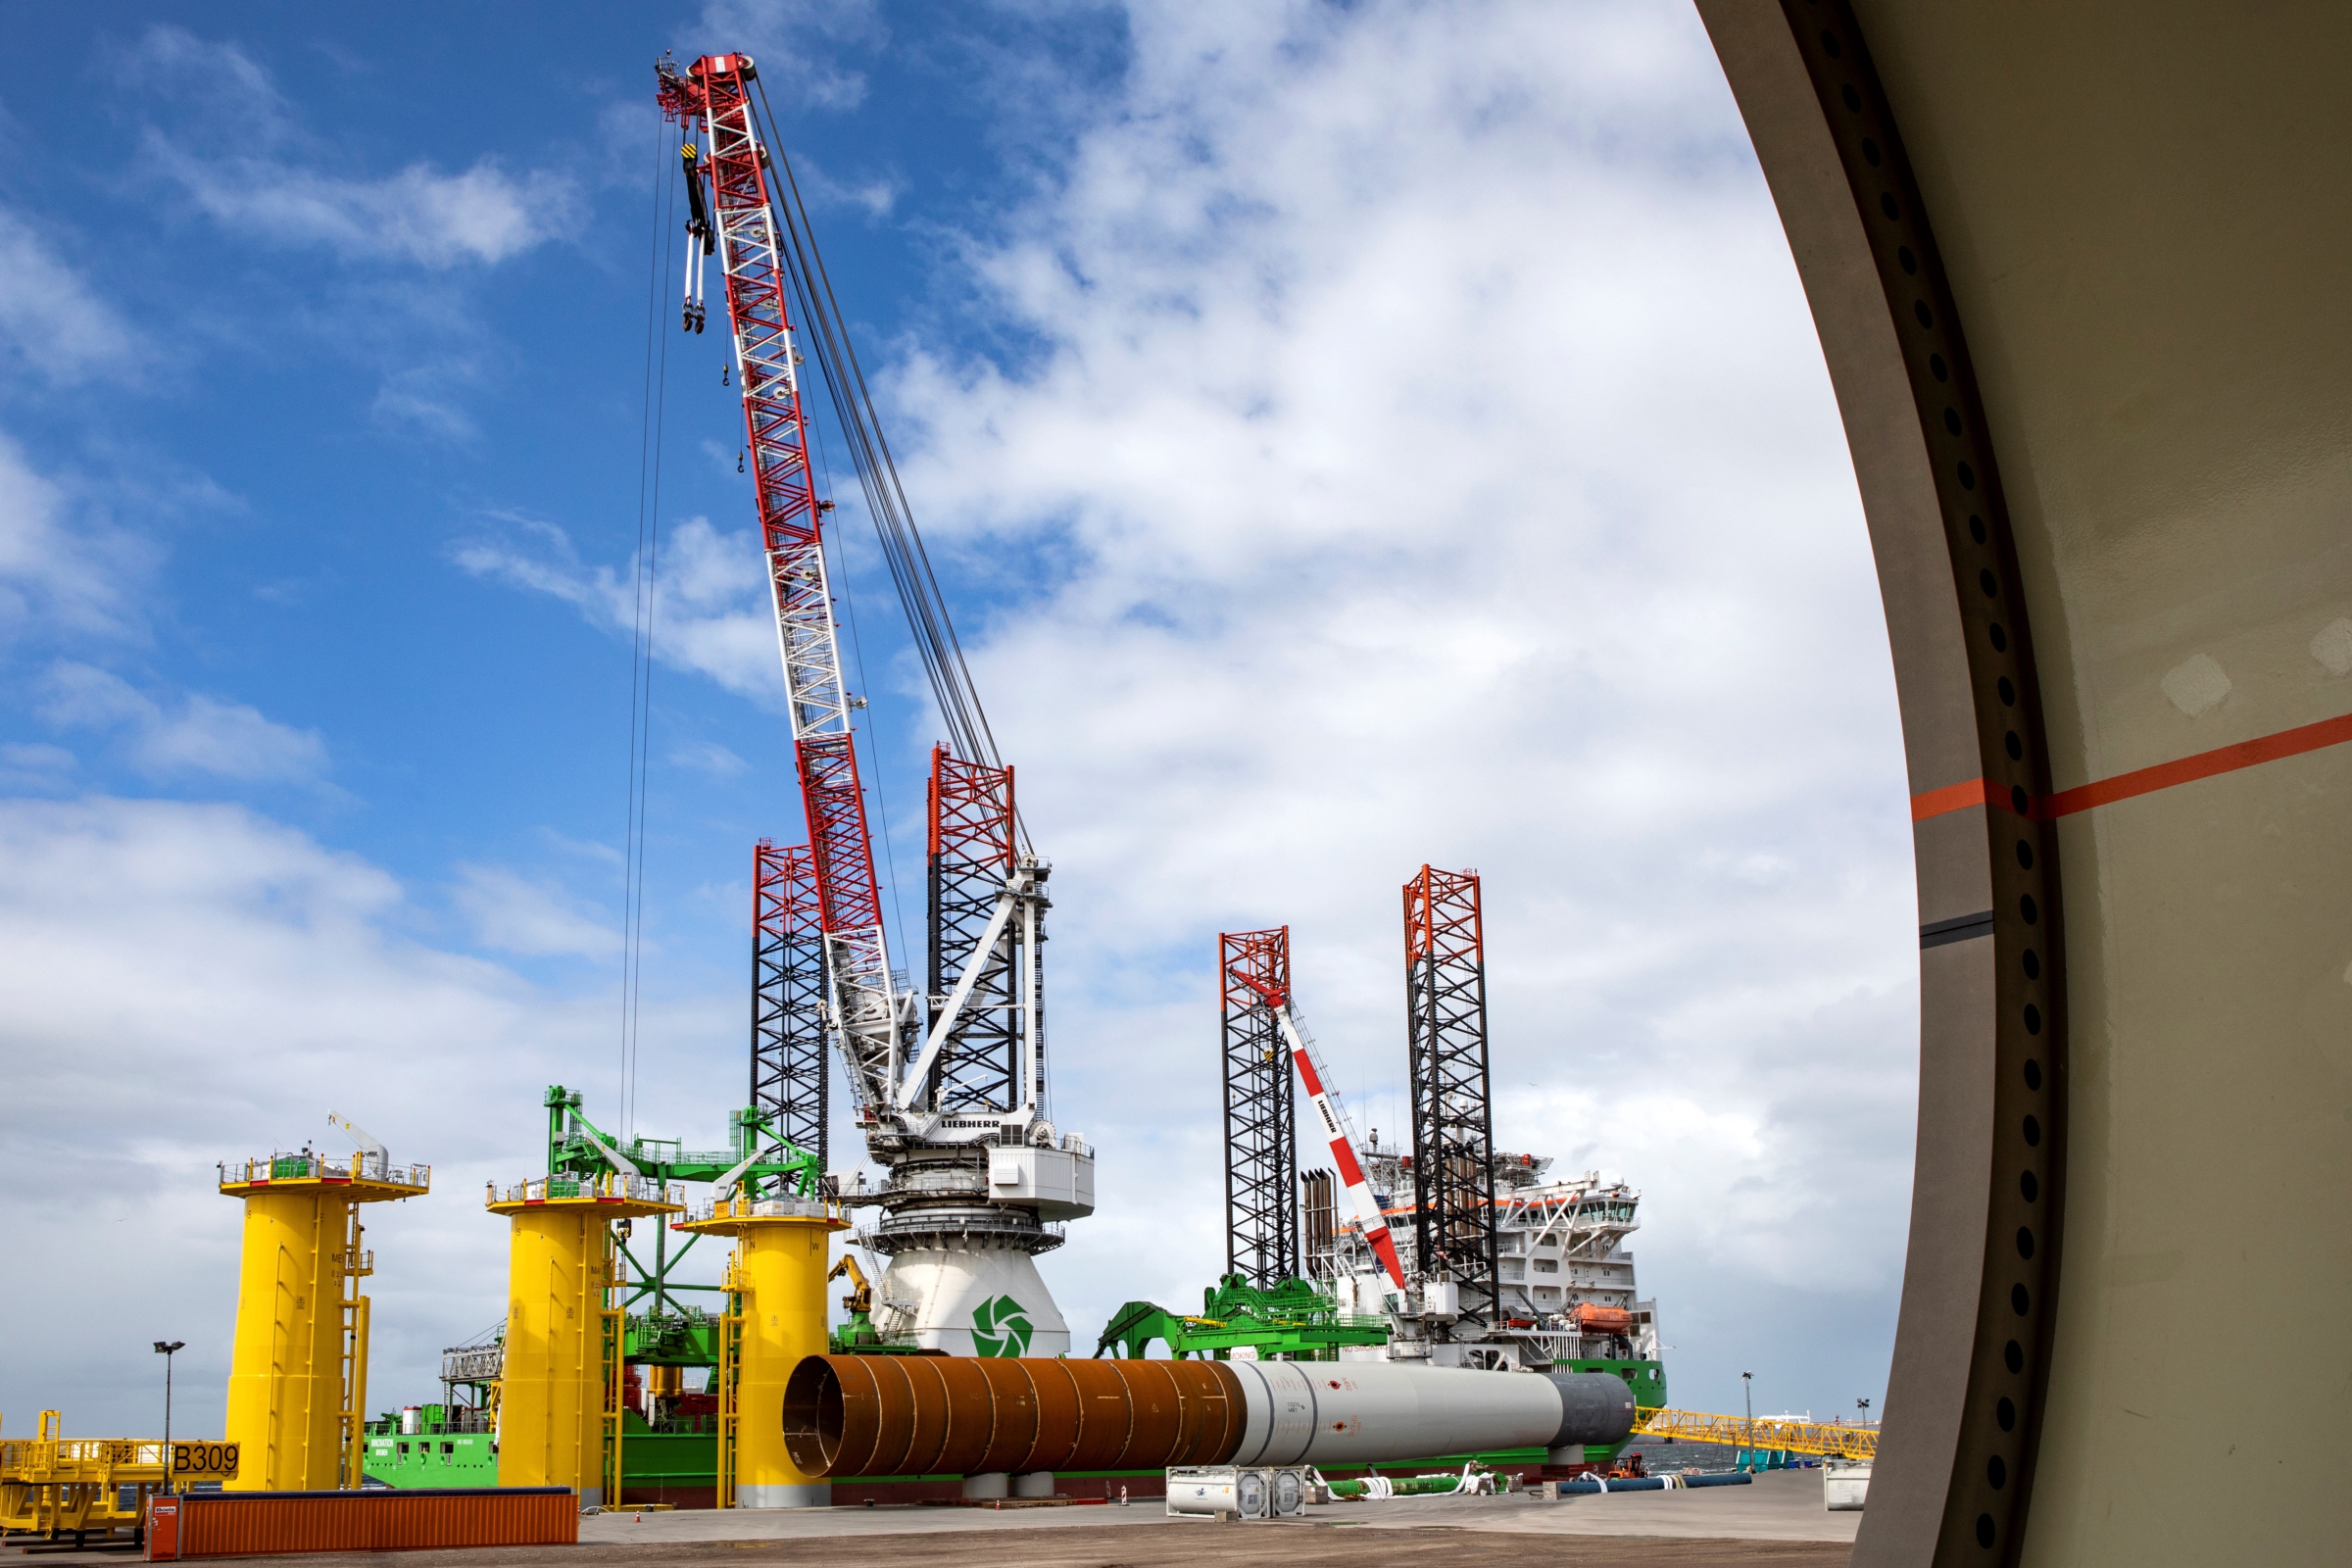 Foundation installation starts at Belgium’s largest offshore wind farm